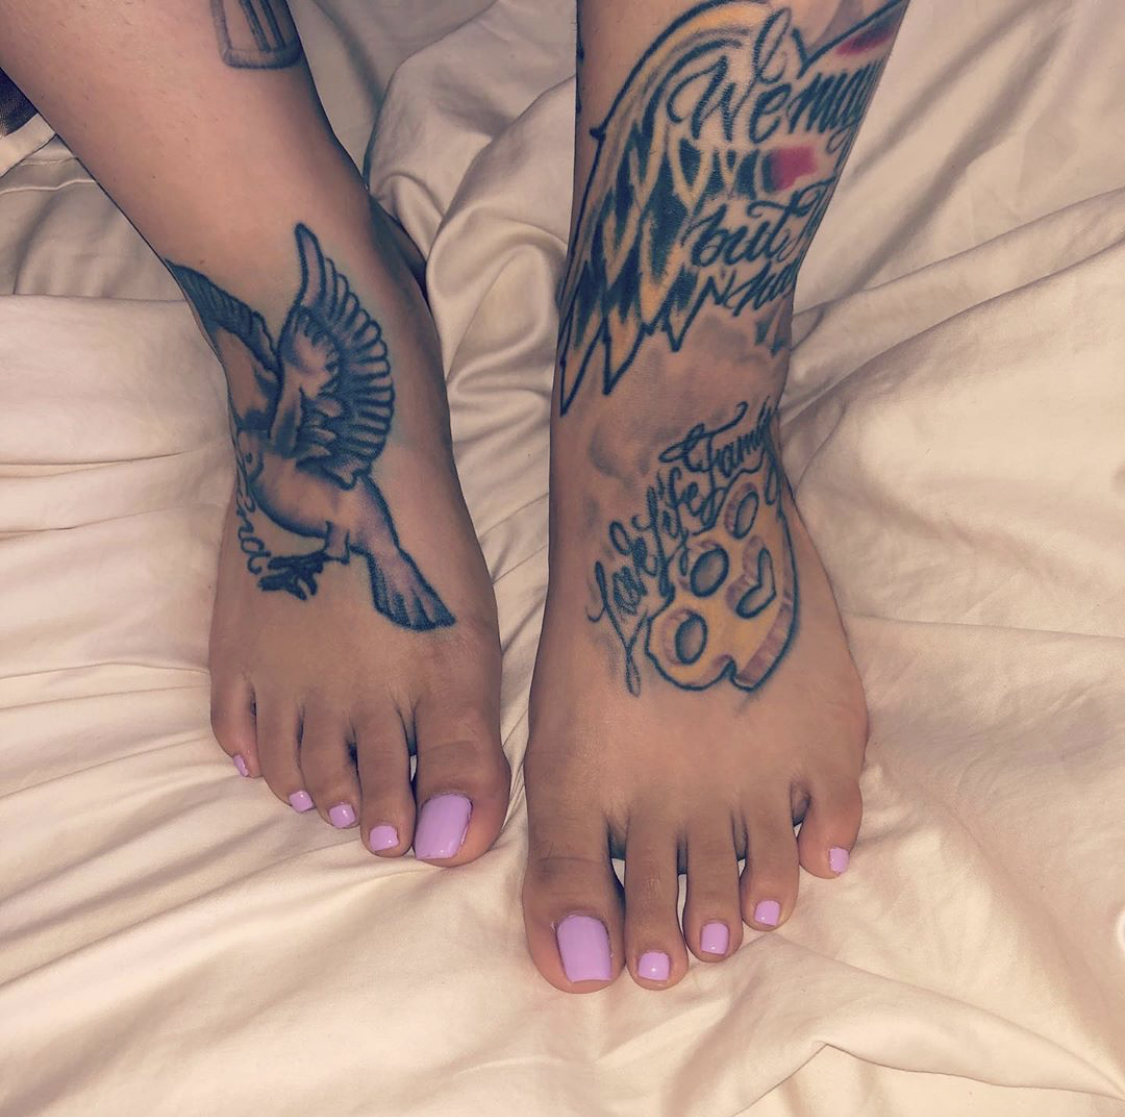 Morgan Westbrooks Feet